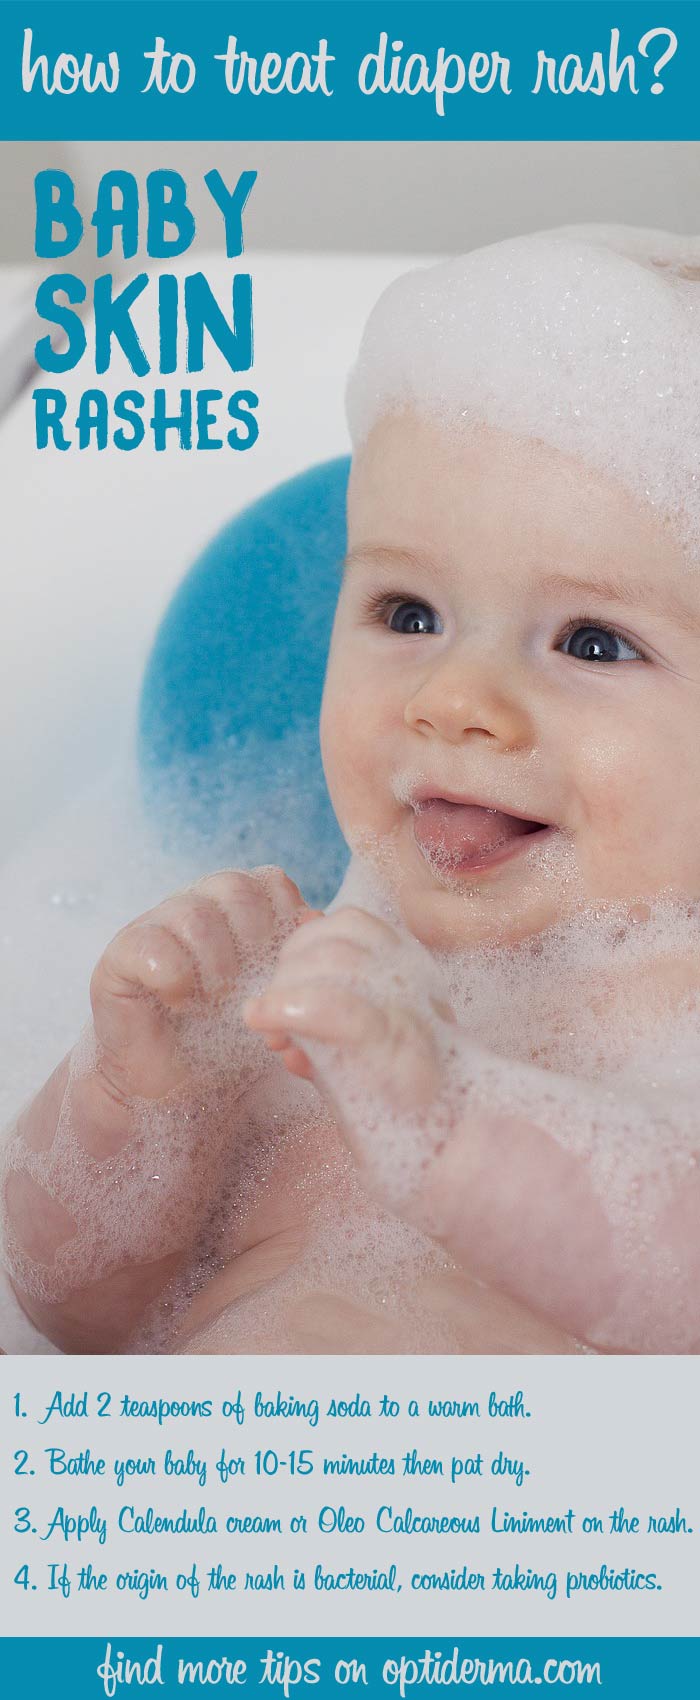 How to Treat Diaper Rash in Babies?